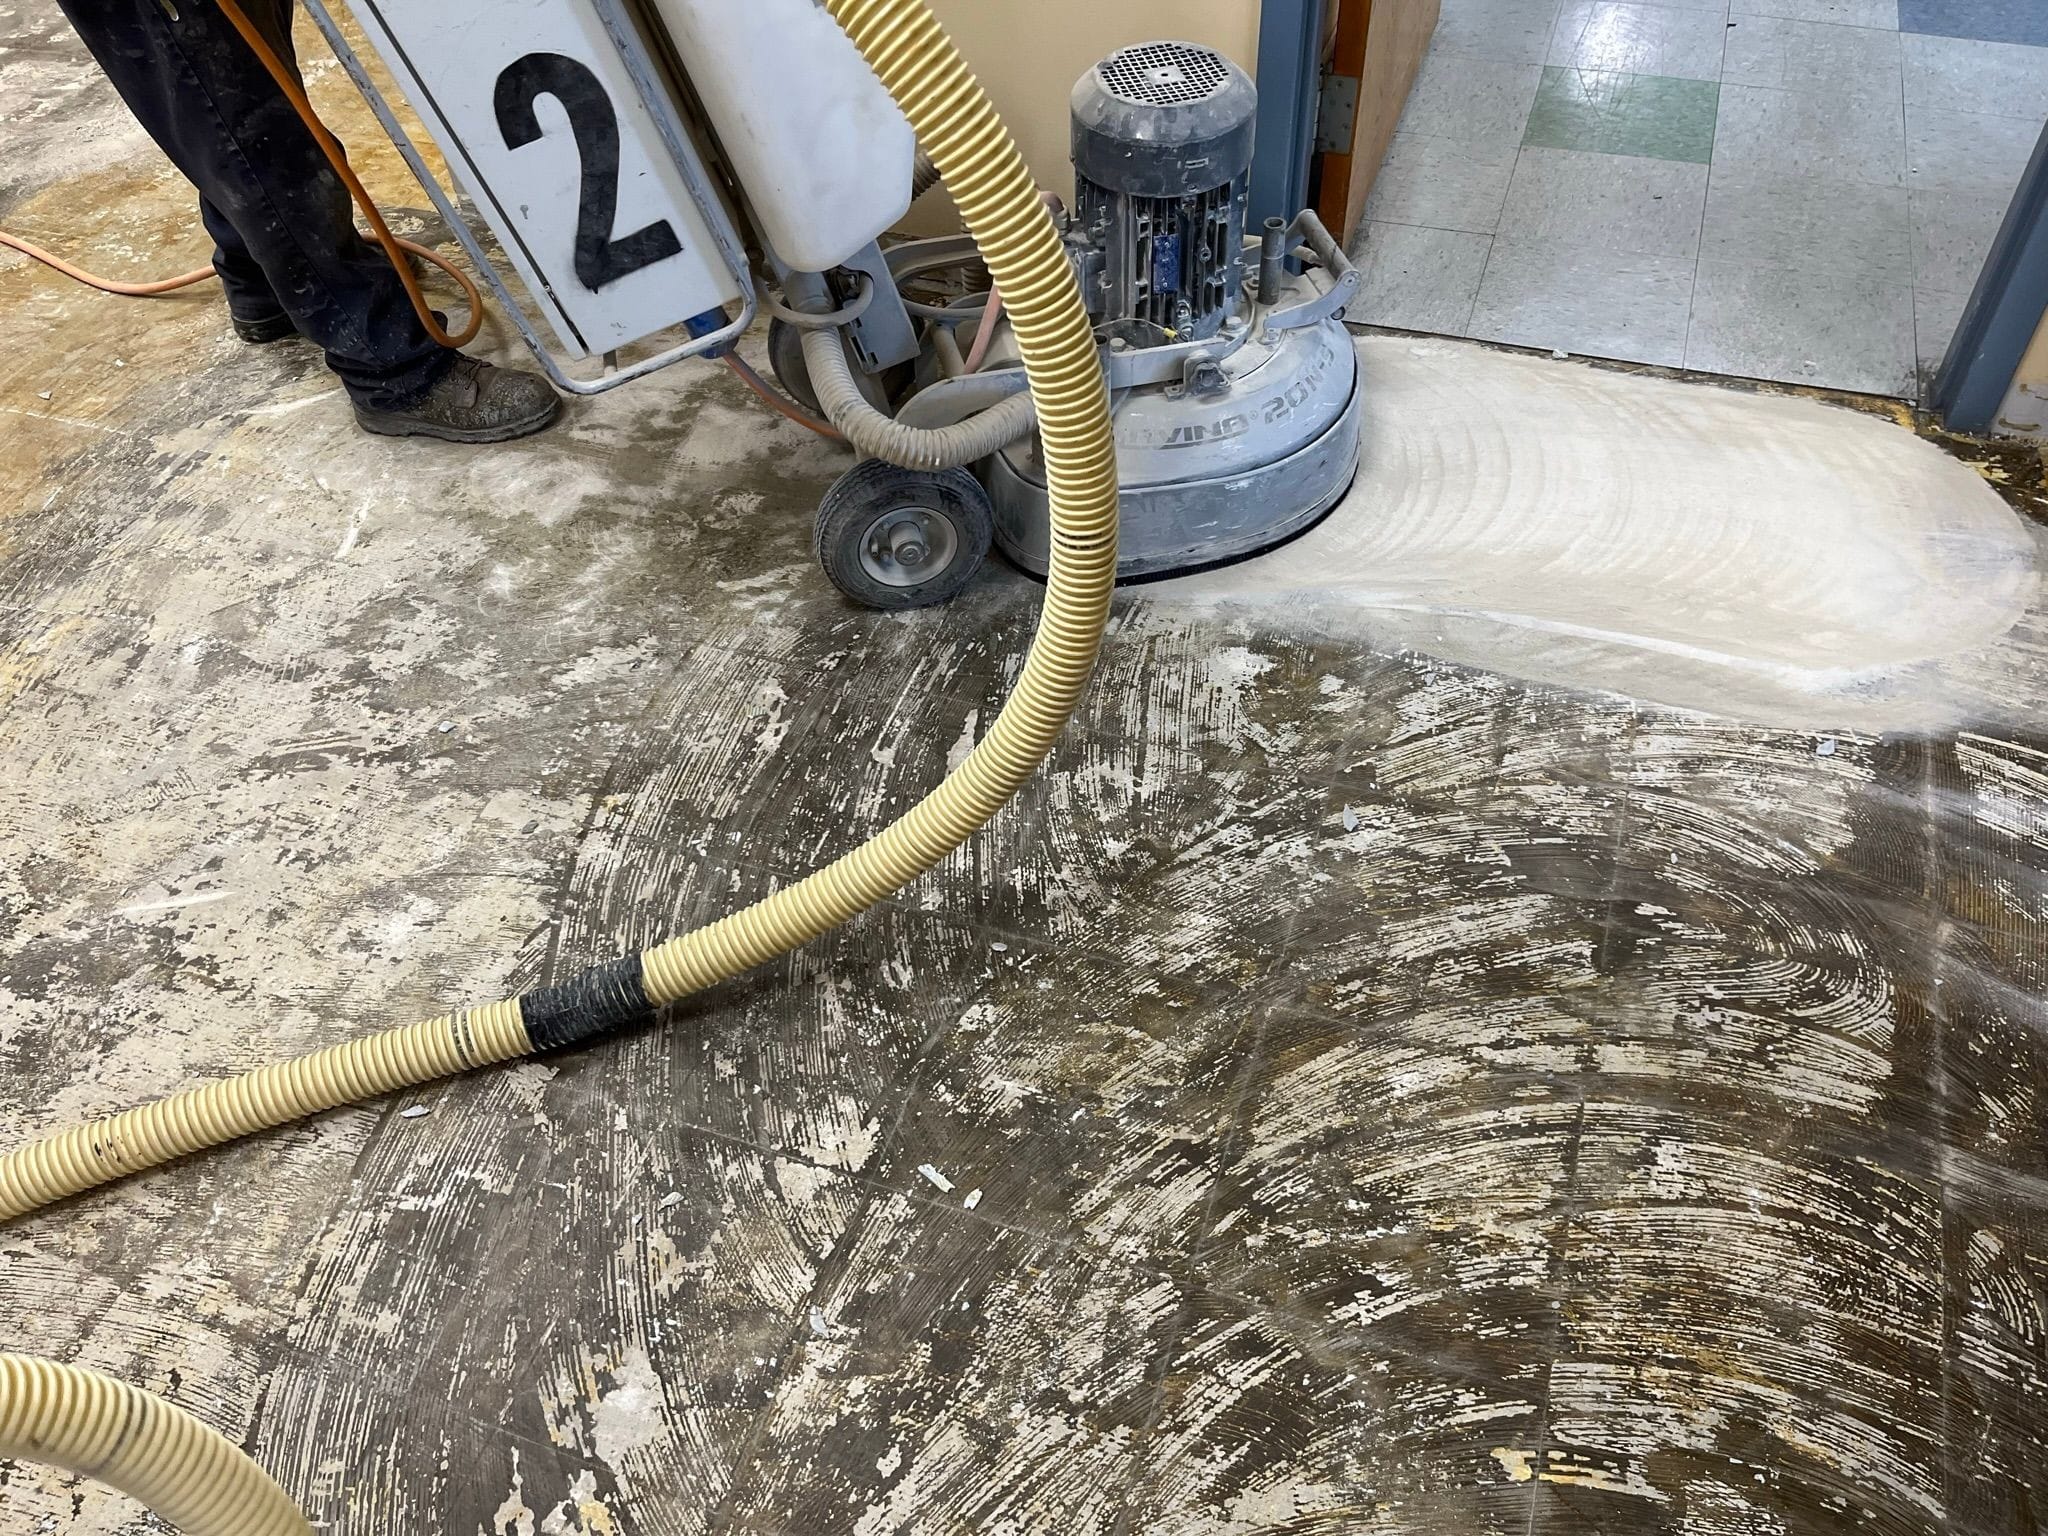 grinding off mastic on floor